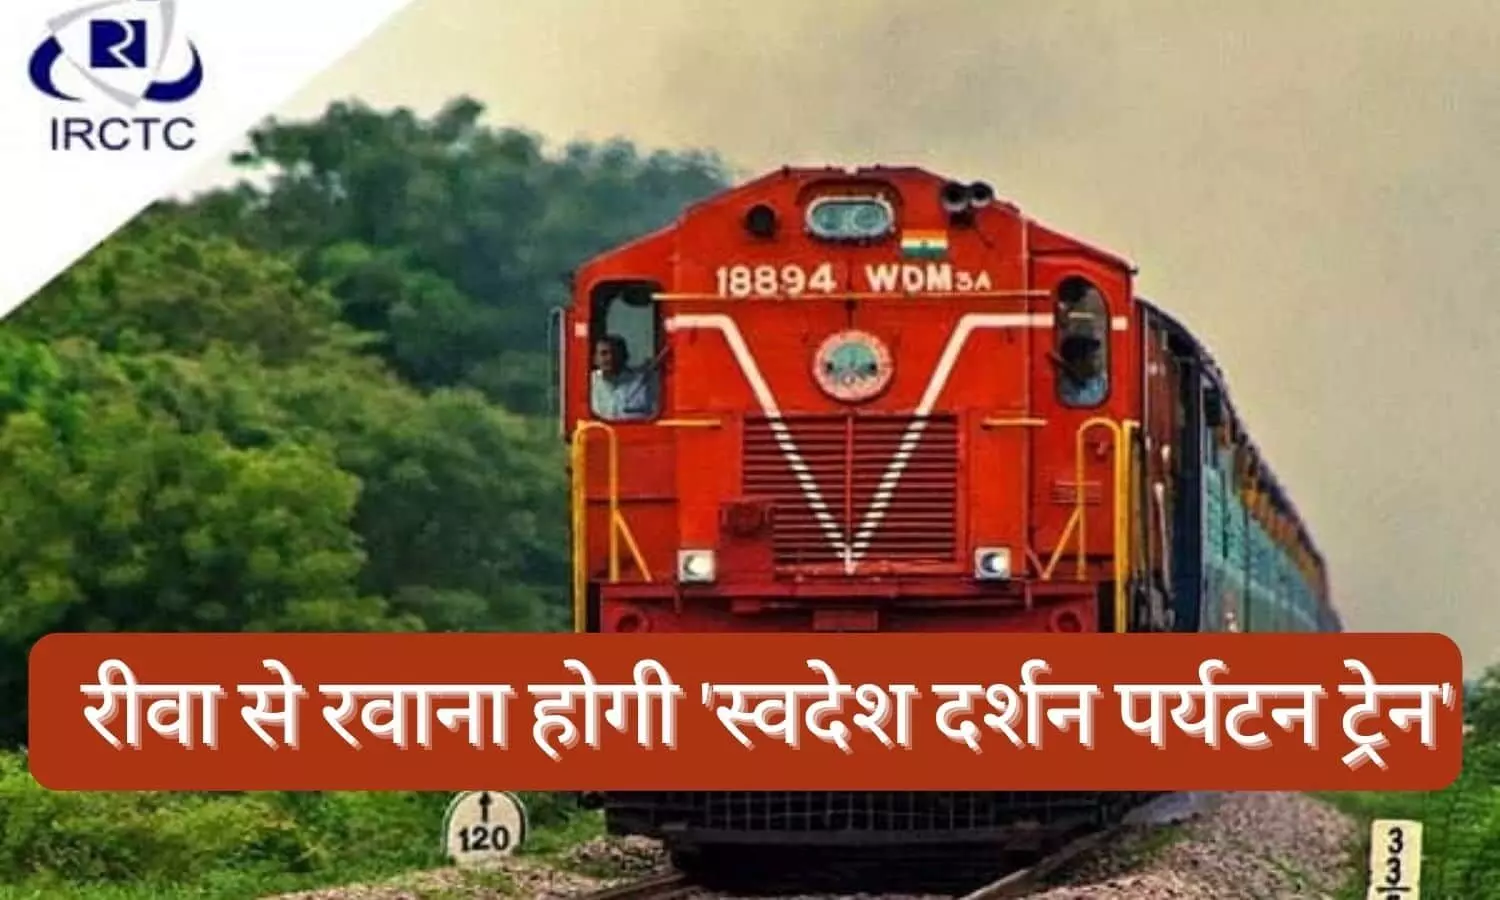 Swadesh Darshan tourism train